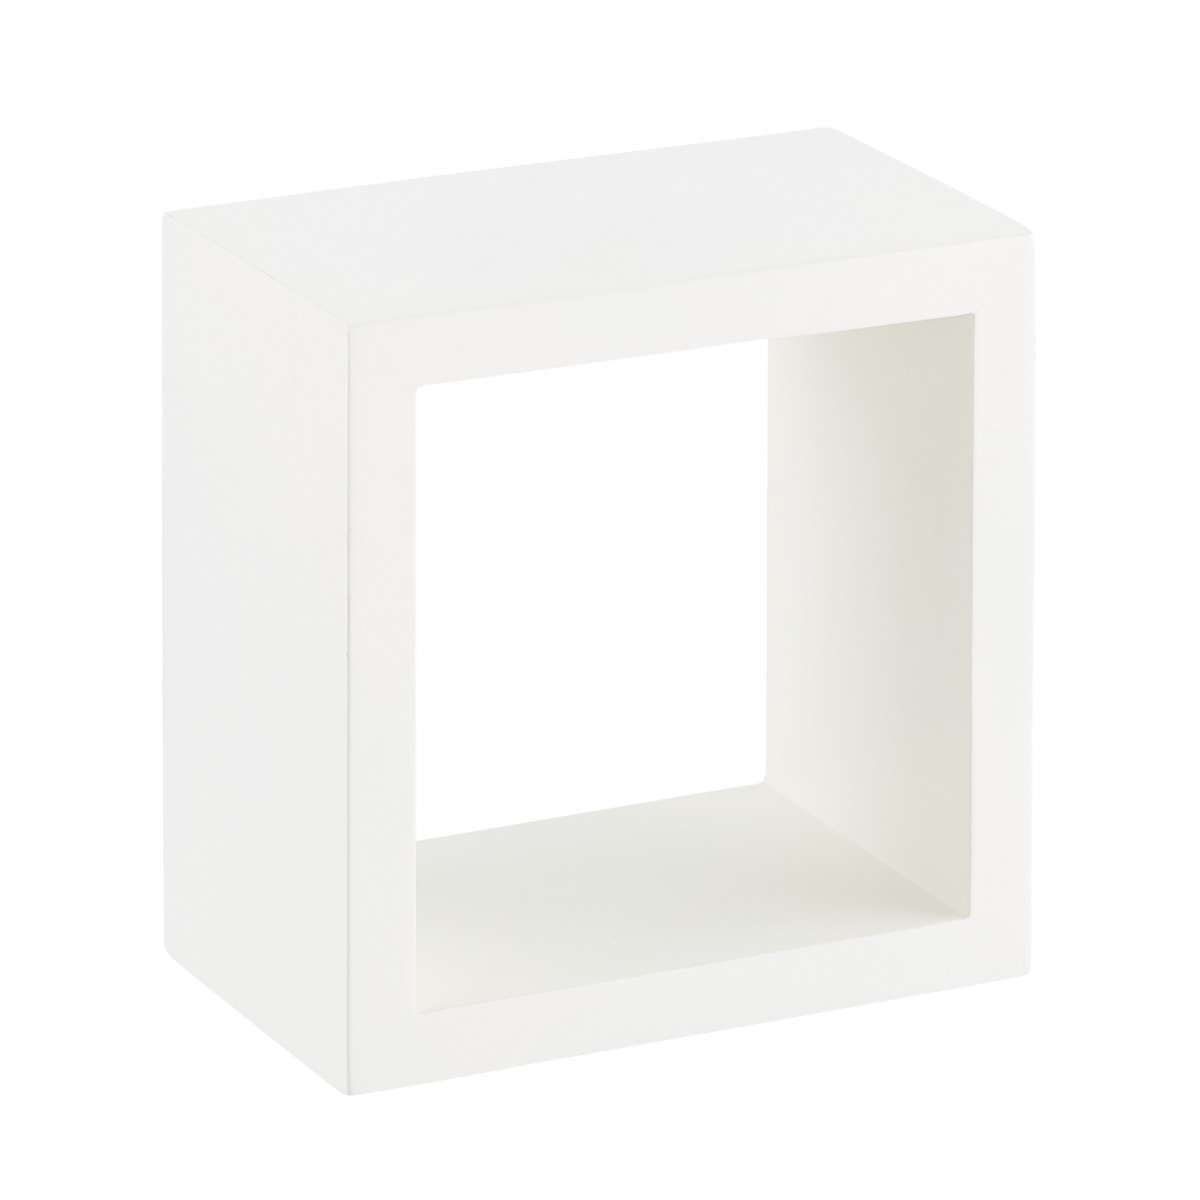 6" sq. x 3-1/2" h Wall Display Cube White